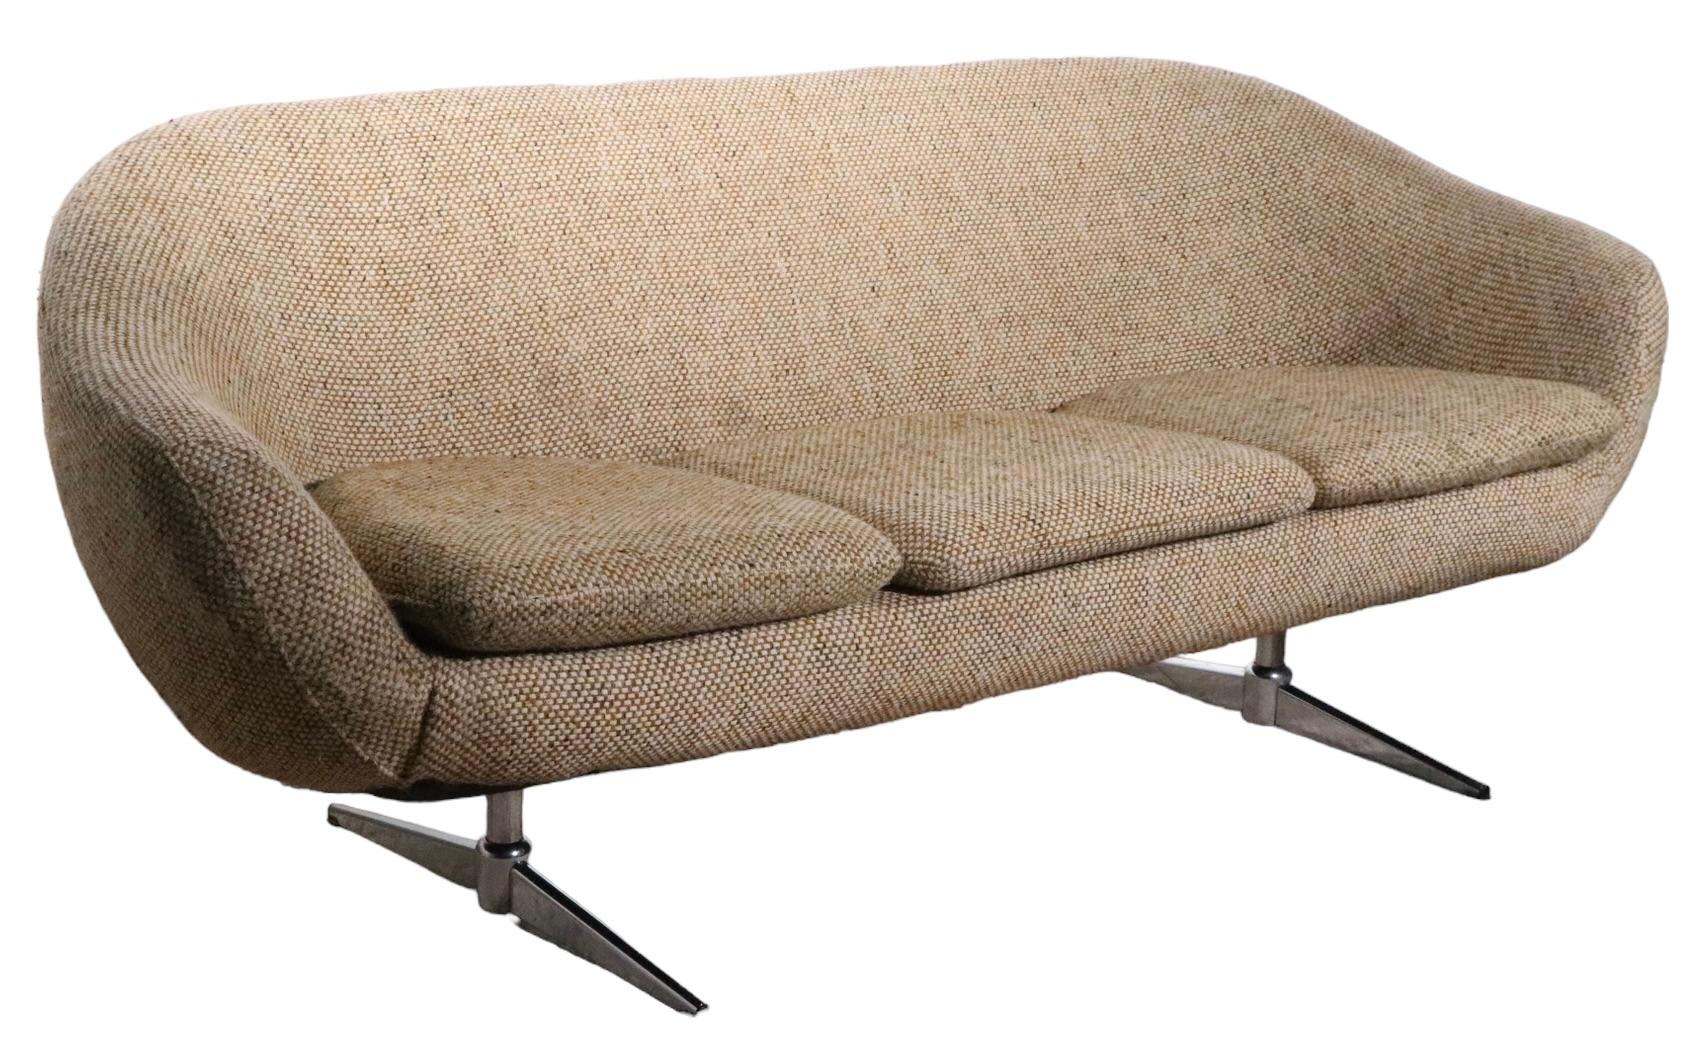 Mod Pod Sofa by Overman in Original Tweed Fabric, circa 1960s - 1970s 7